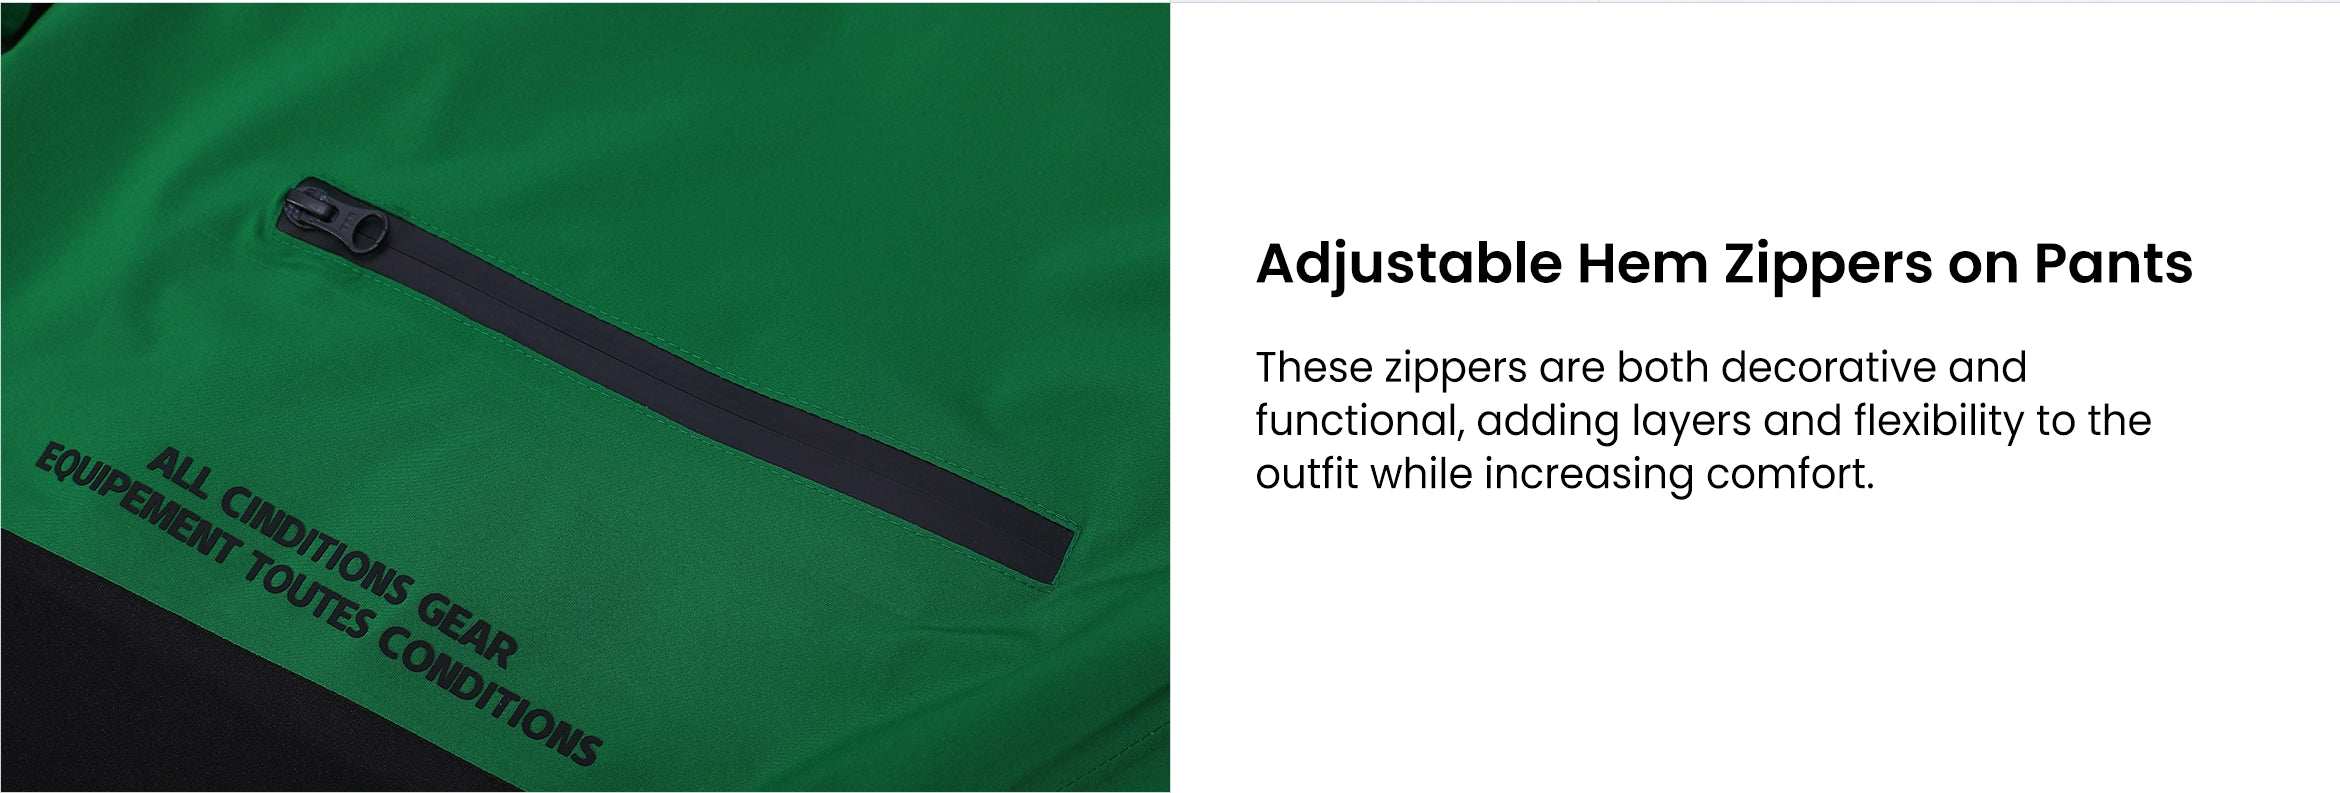 10. Adjustable Hem Zippers on Pants